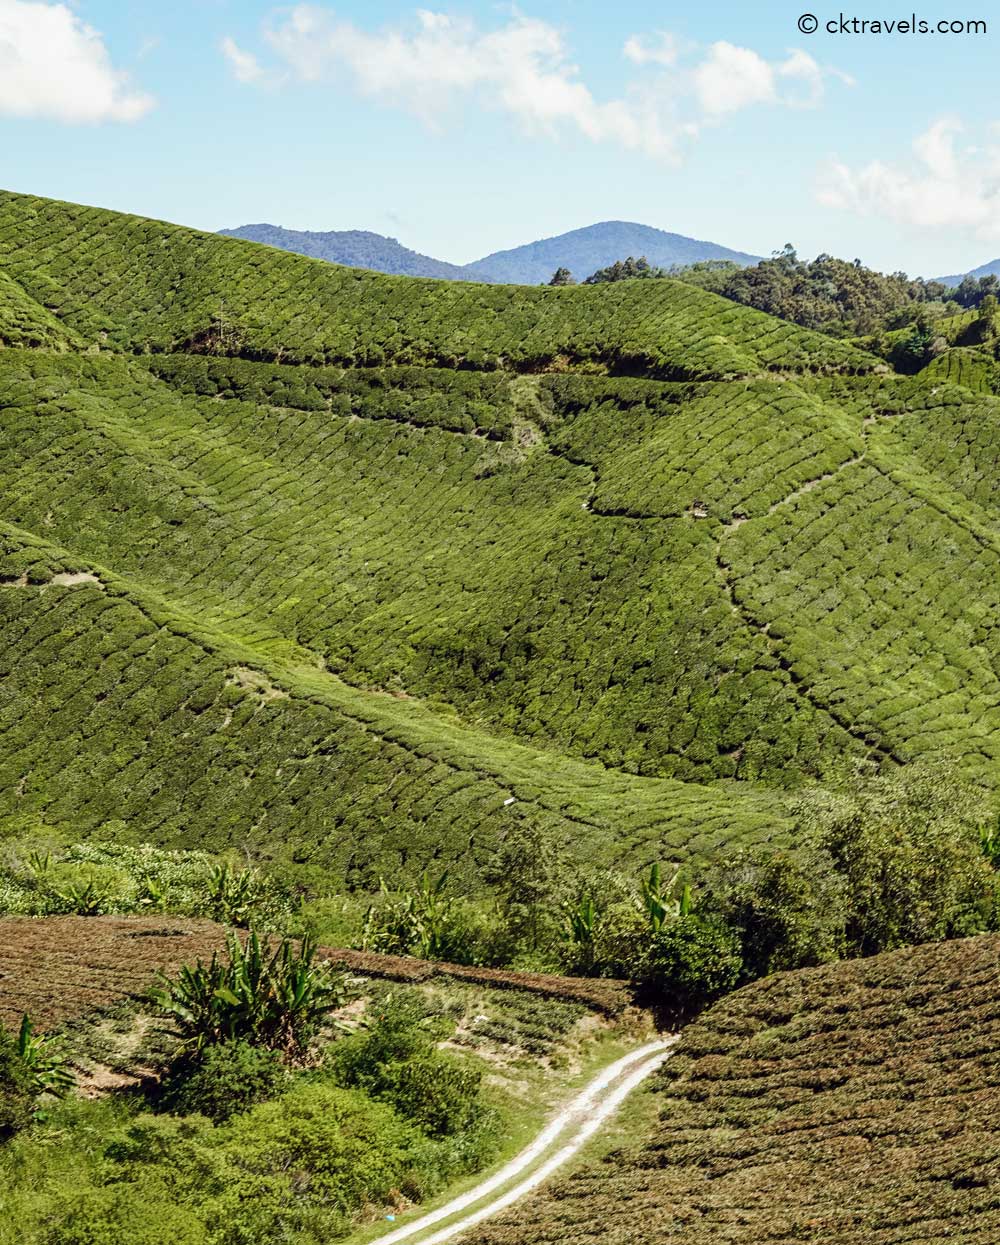 Cameron Highlands tea plantation